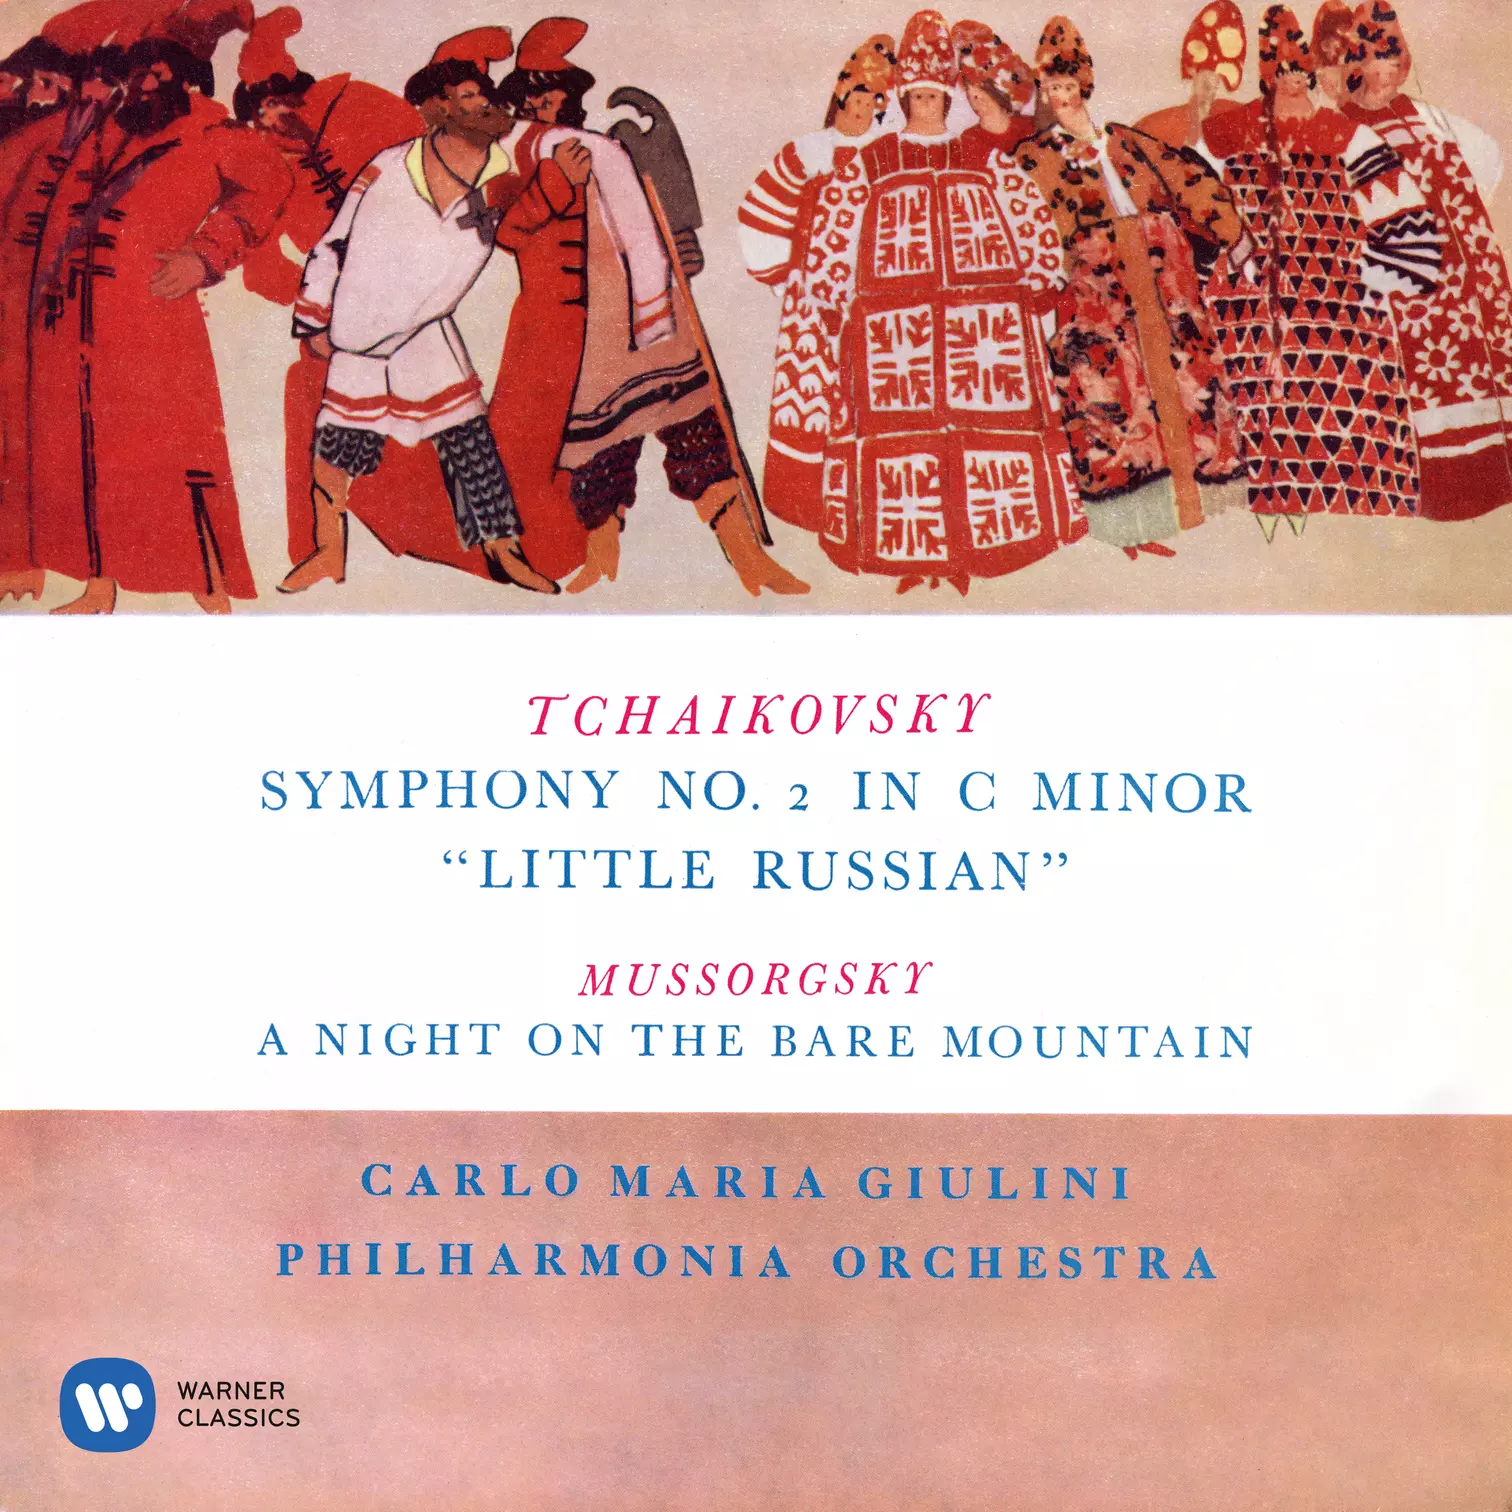 Tchaikovsky: Symphony No. 2 “Little Russian” – Mussorgsky: A Night on Bare Mountain